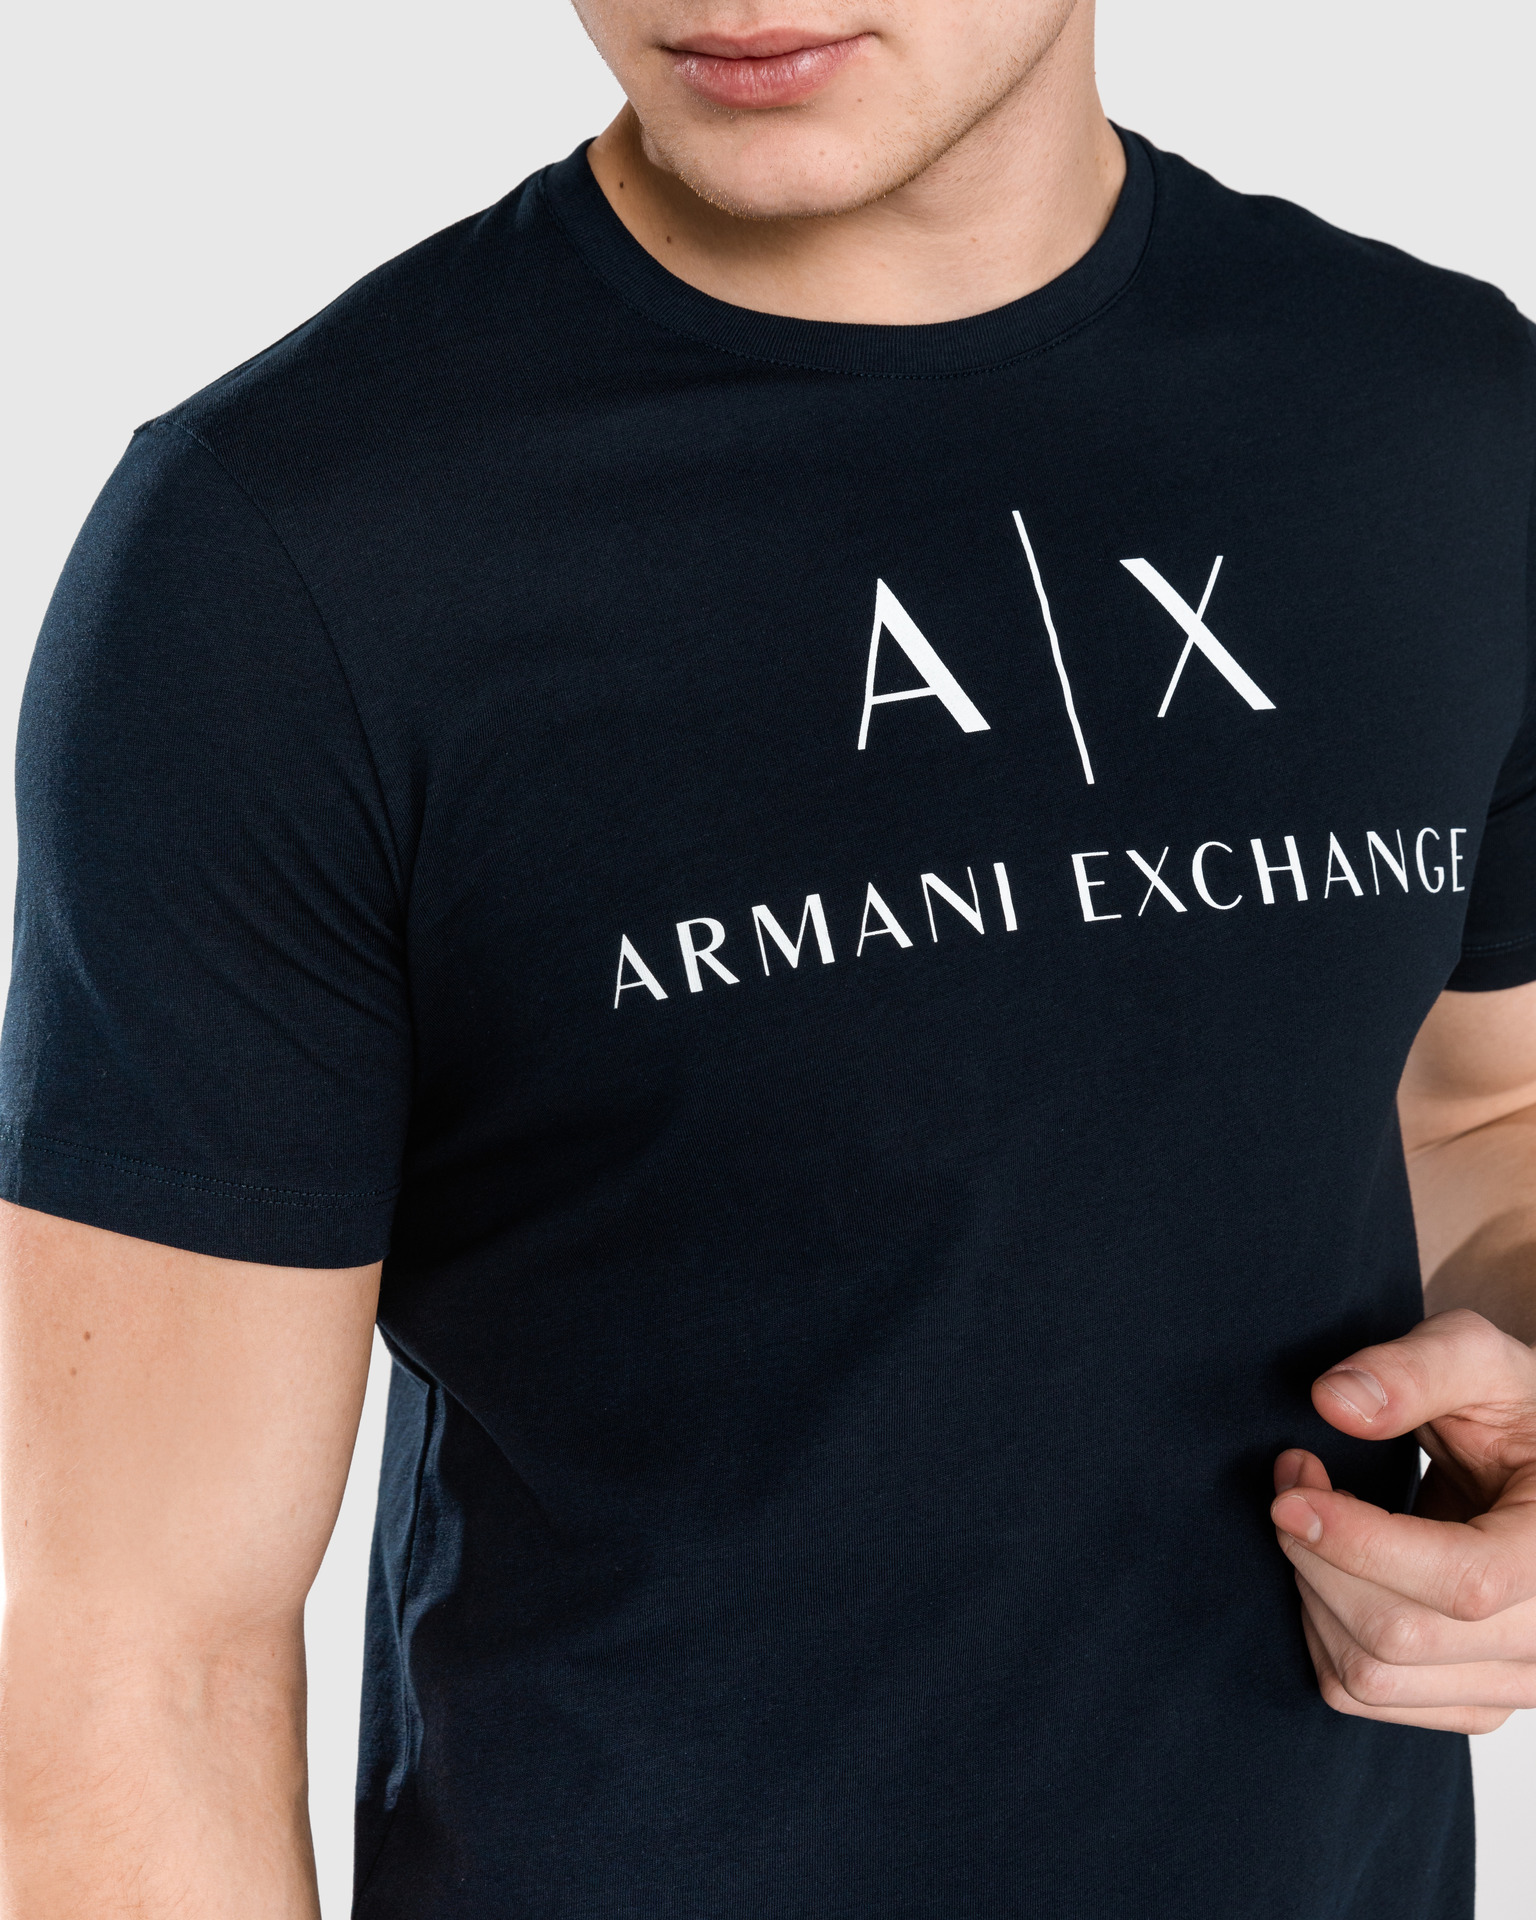 Armani Exchange. Вещи Армани мужские. Armani Exchange 8nzj16. Армани на липучках мужские. Армани эксчендж интернет магазин